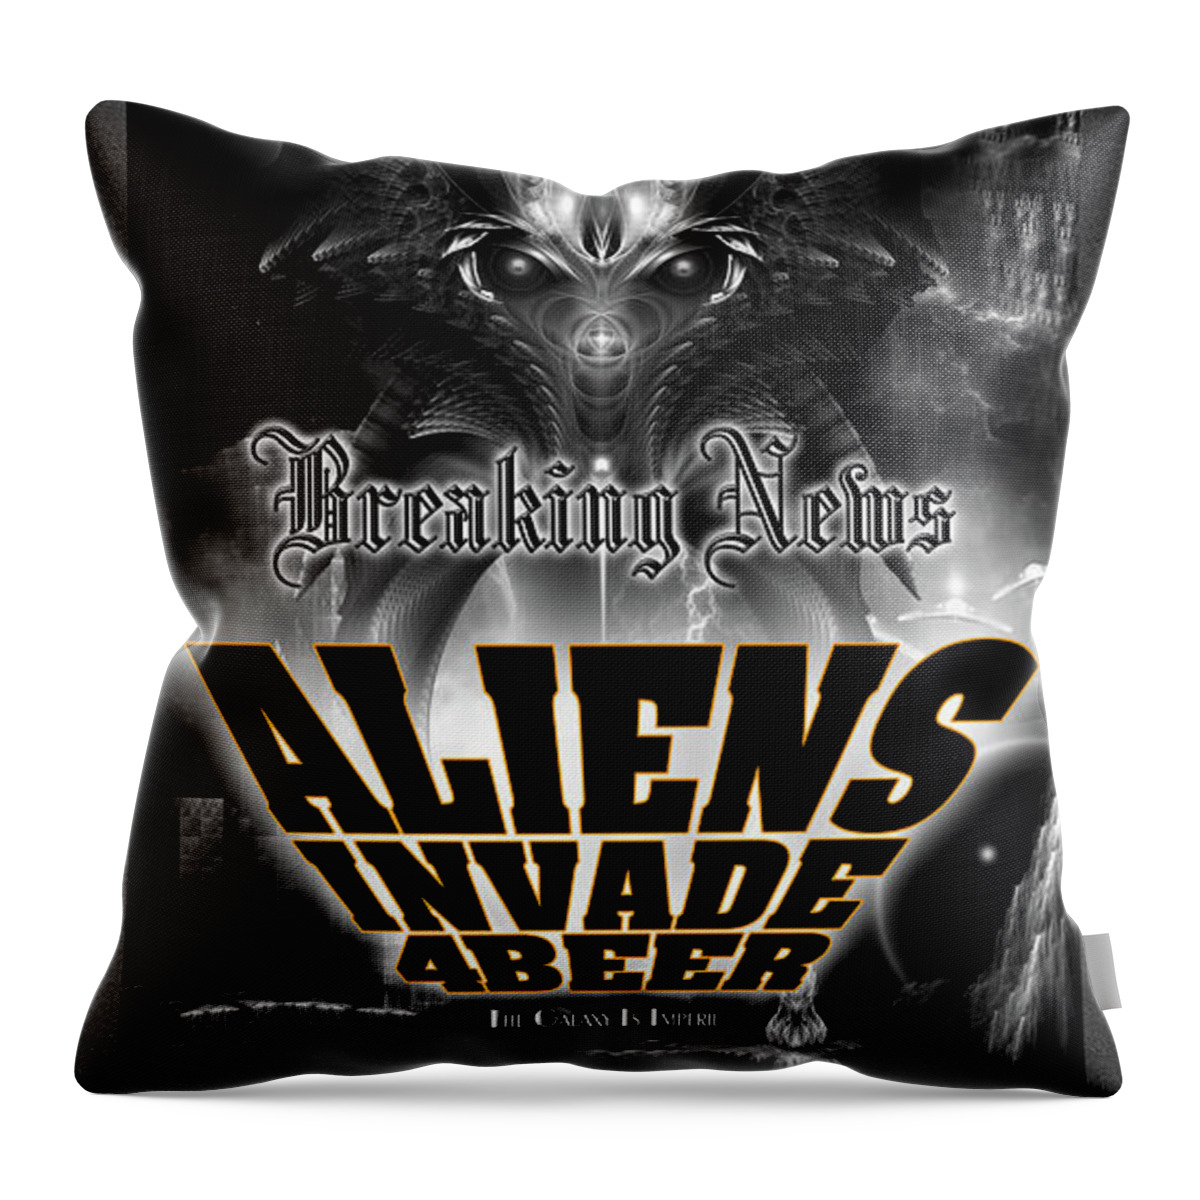 Aliens Throw Pillow featuring the digital art Aliens Invade 4 Beer Galaxy Attack by Rolando Burbon